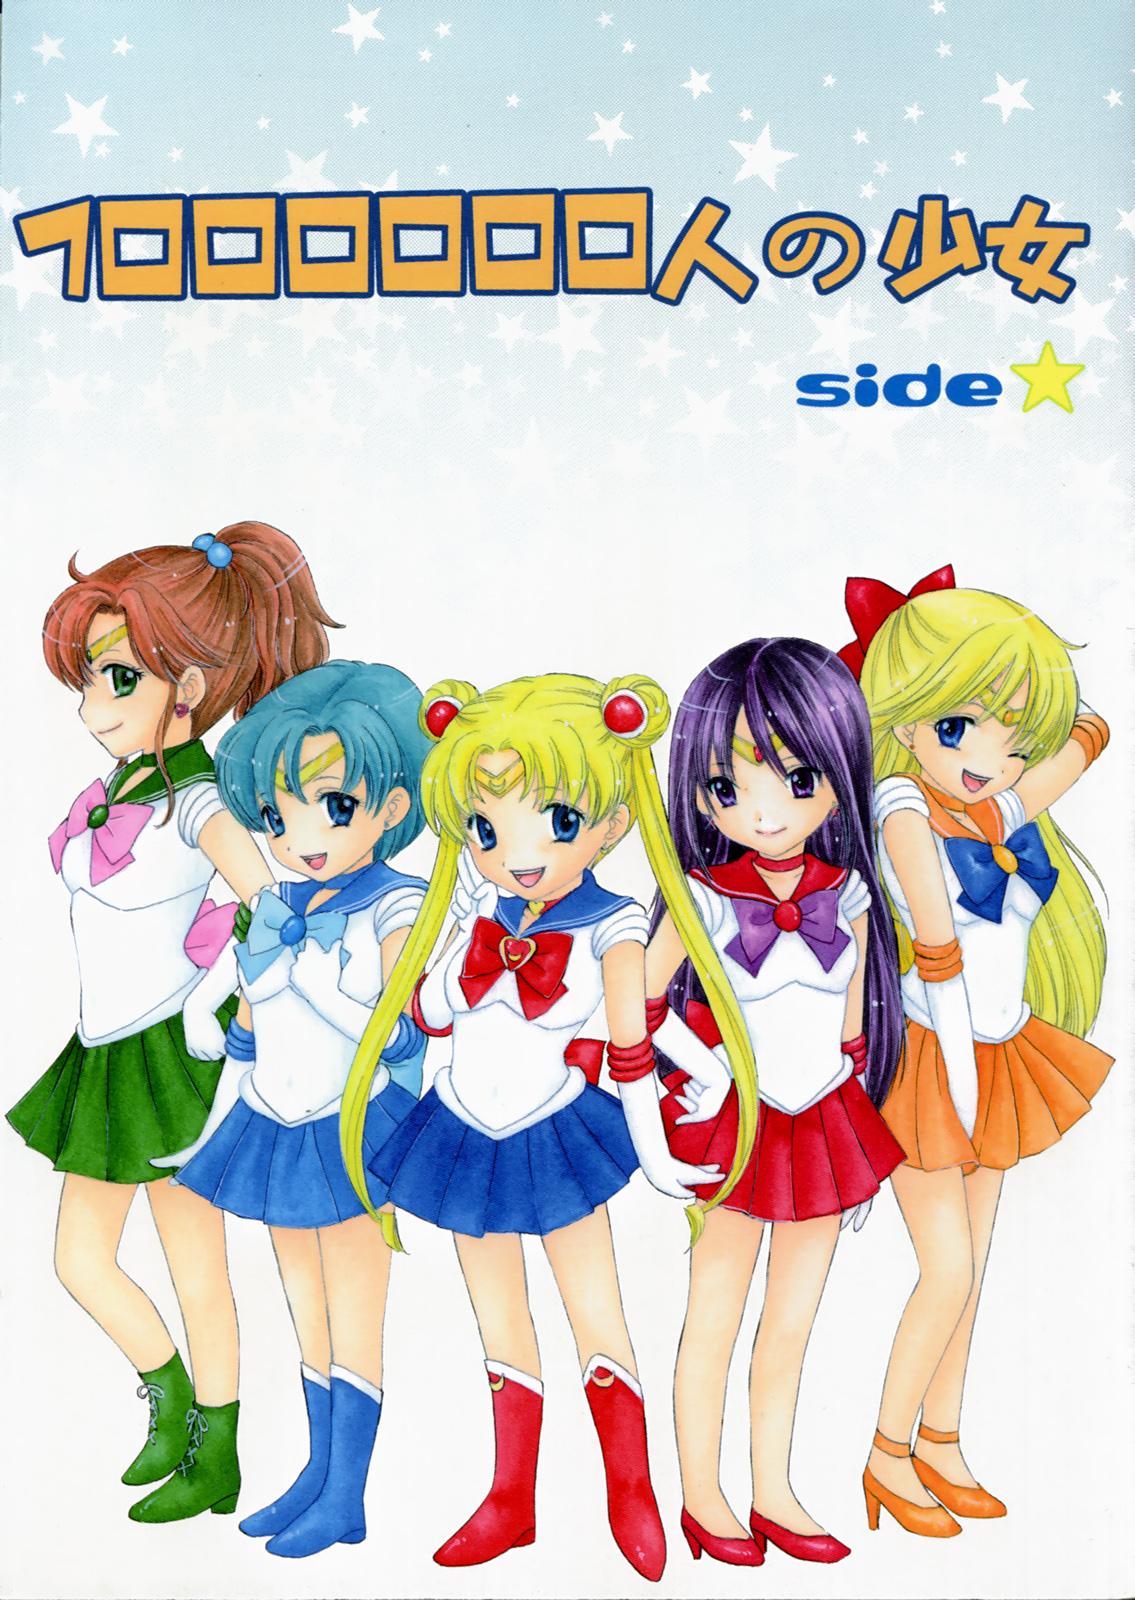 Gay Cumshots 1000000-nin no Shoujo side star - Sailor moon Bra - Page 1